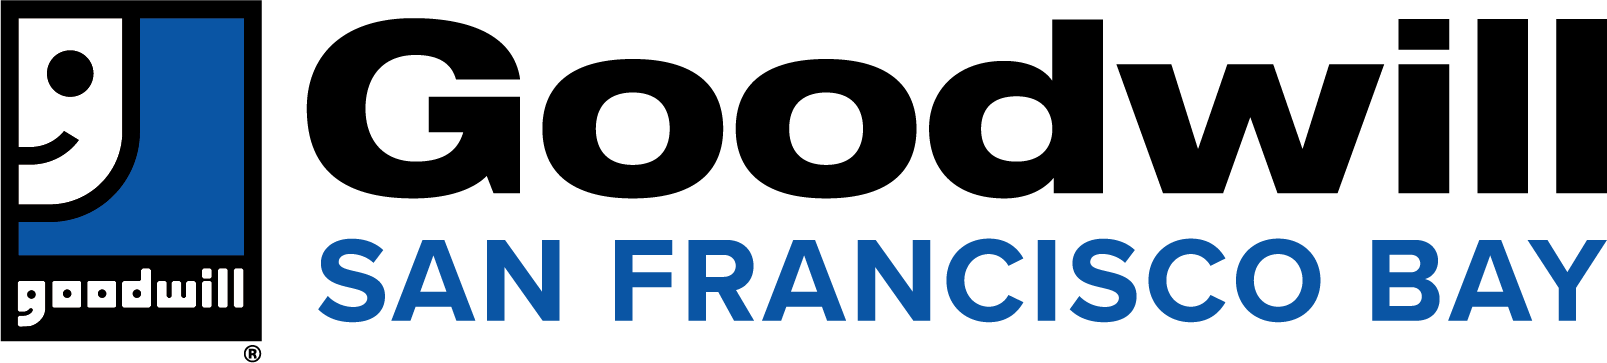 SF Goodwill Logo